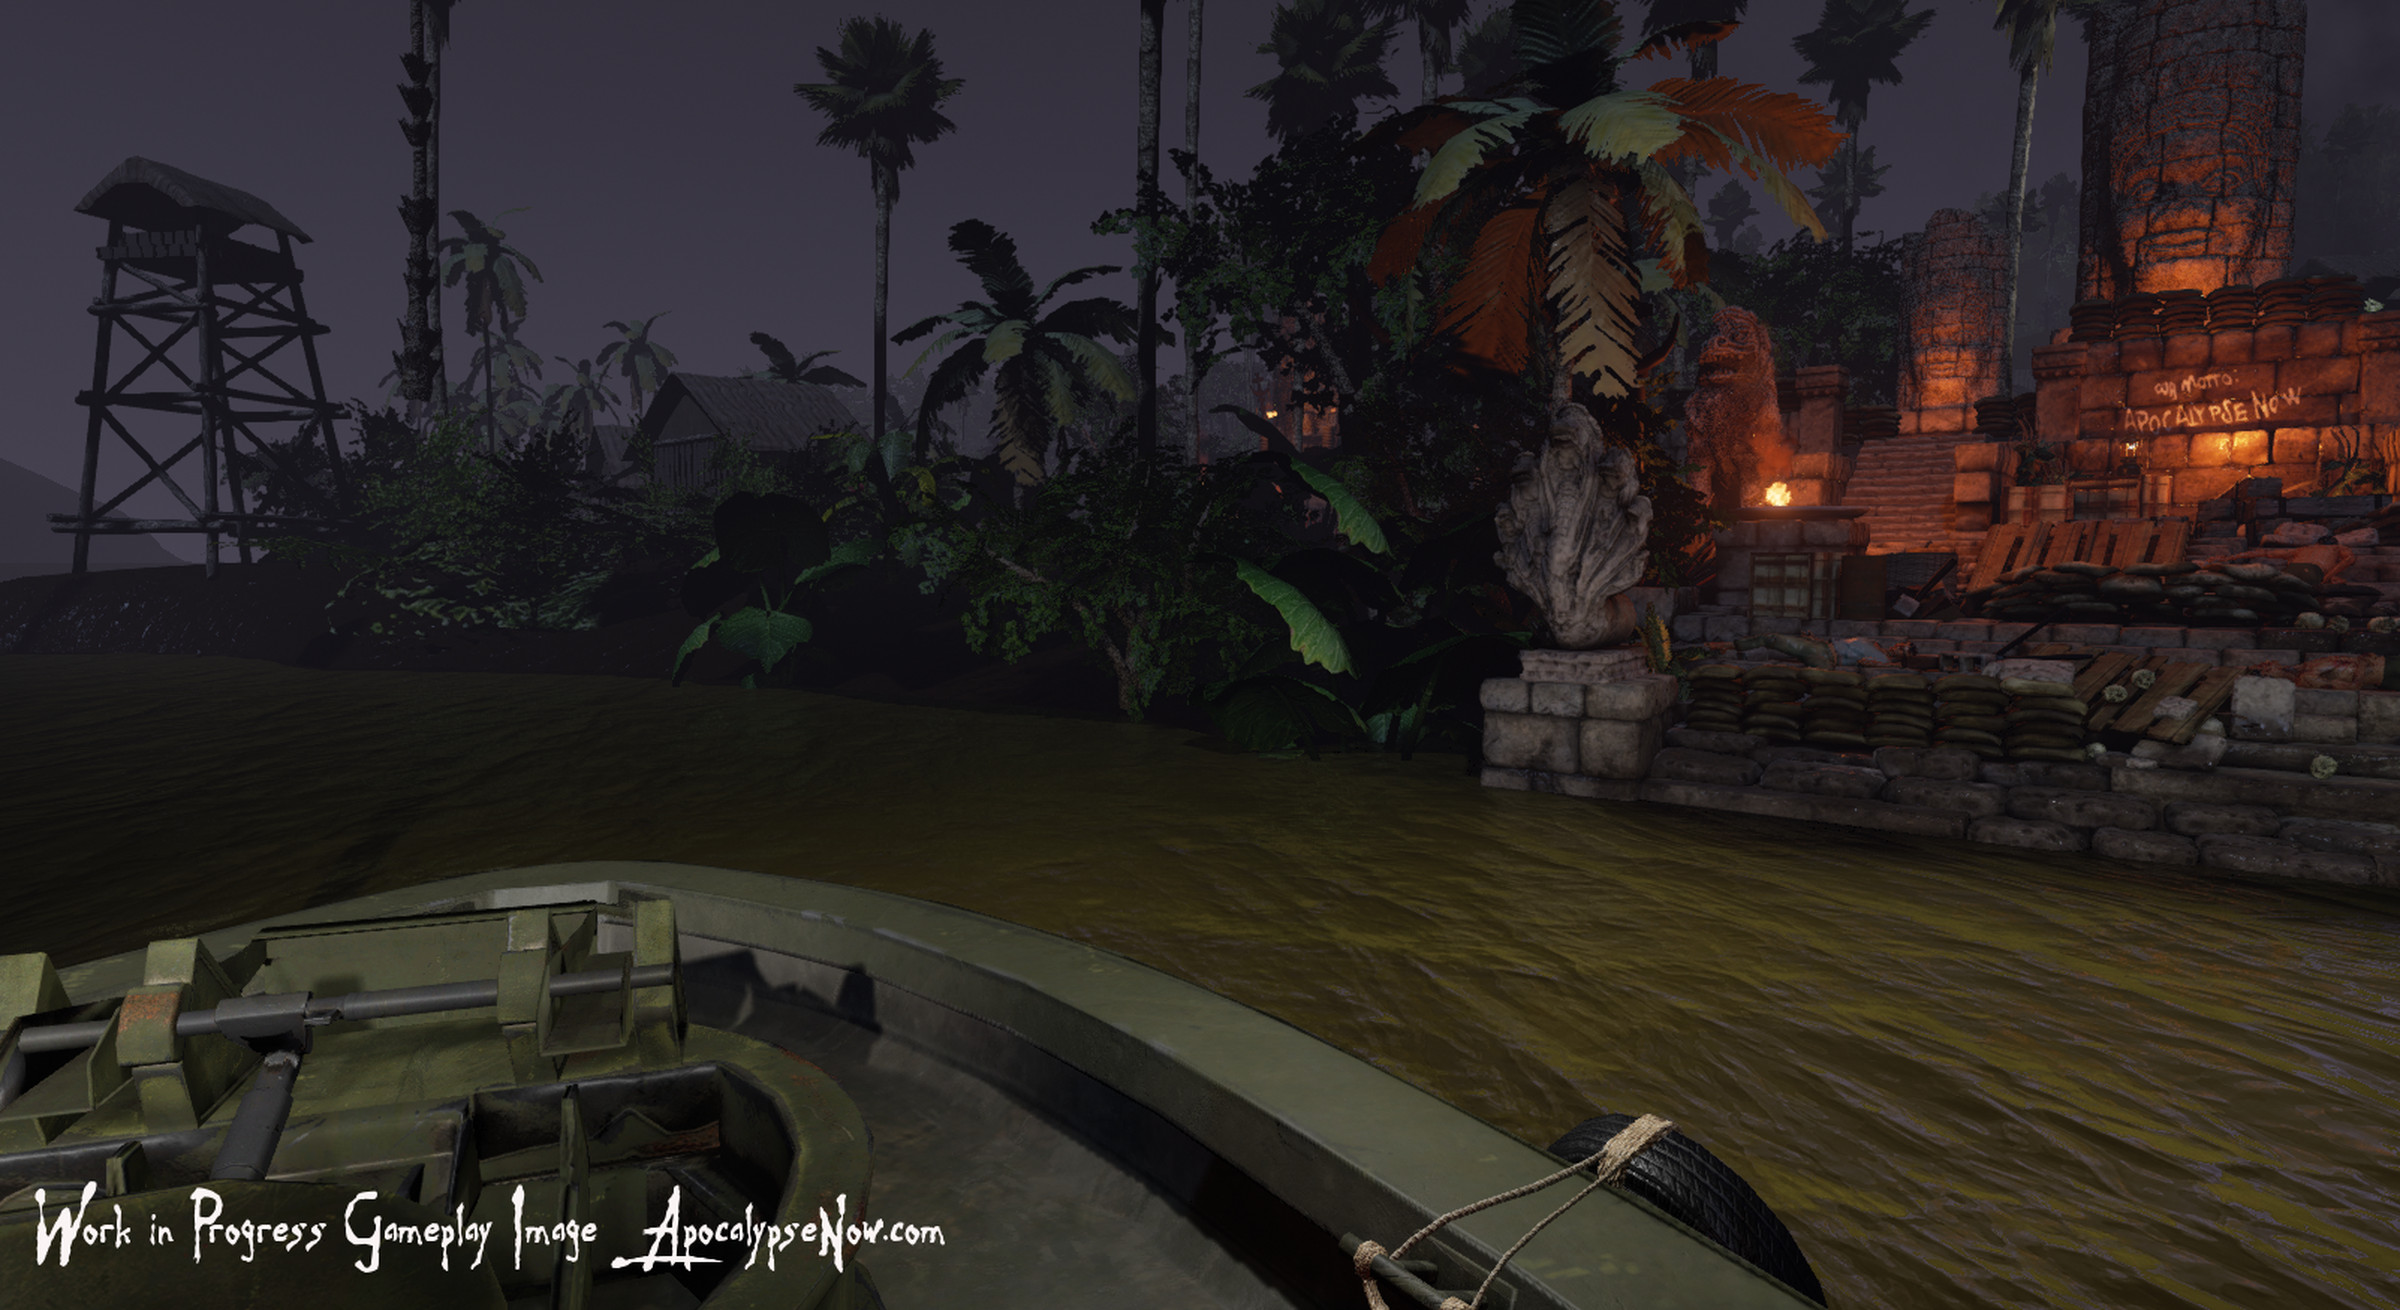 Apocalypse Now screenshot, 2011.